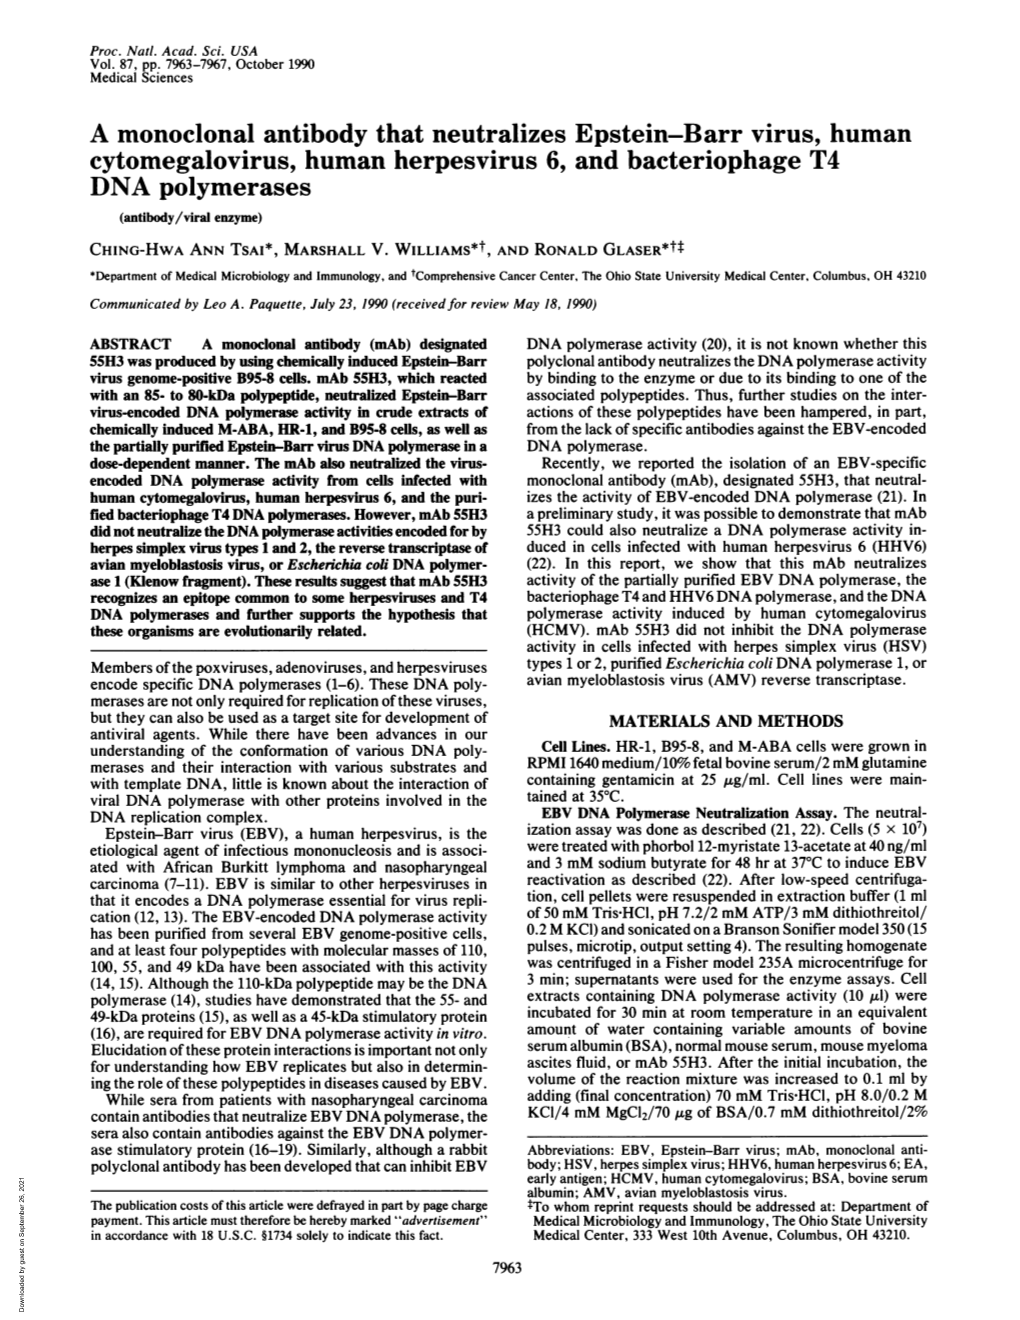 Cytomegalovirus Human Herpesvirus 6 And Bacteriophage T4 Dna Polymerases Antibodyviral 9341